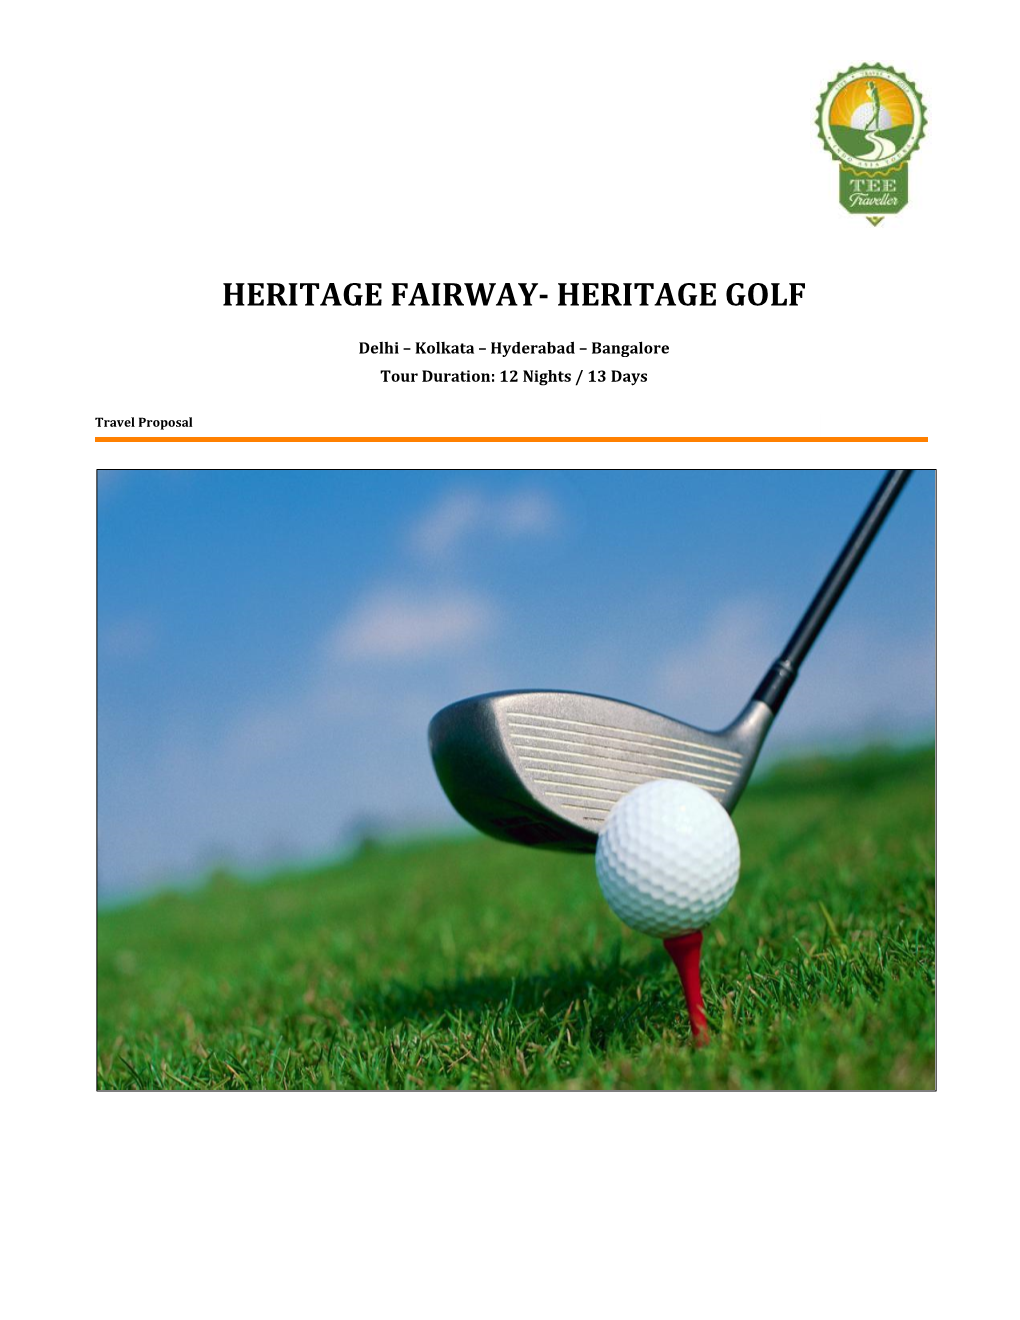 Heritage Fairway- Heritage Golf